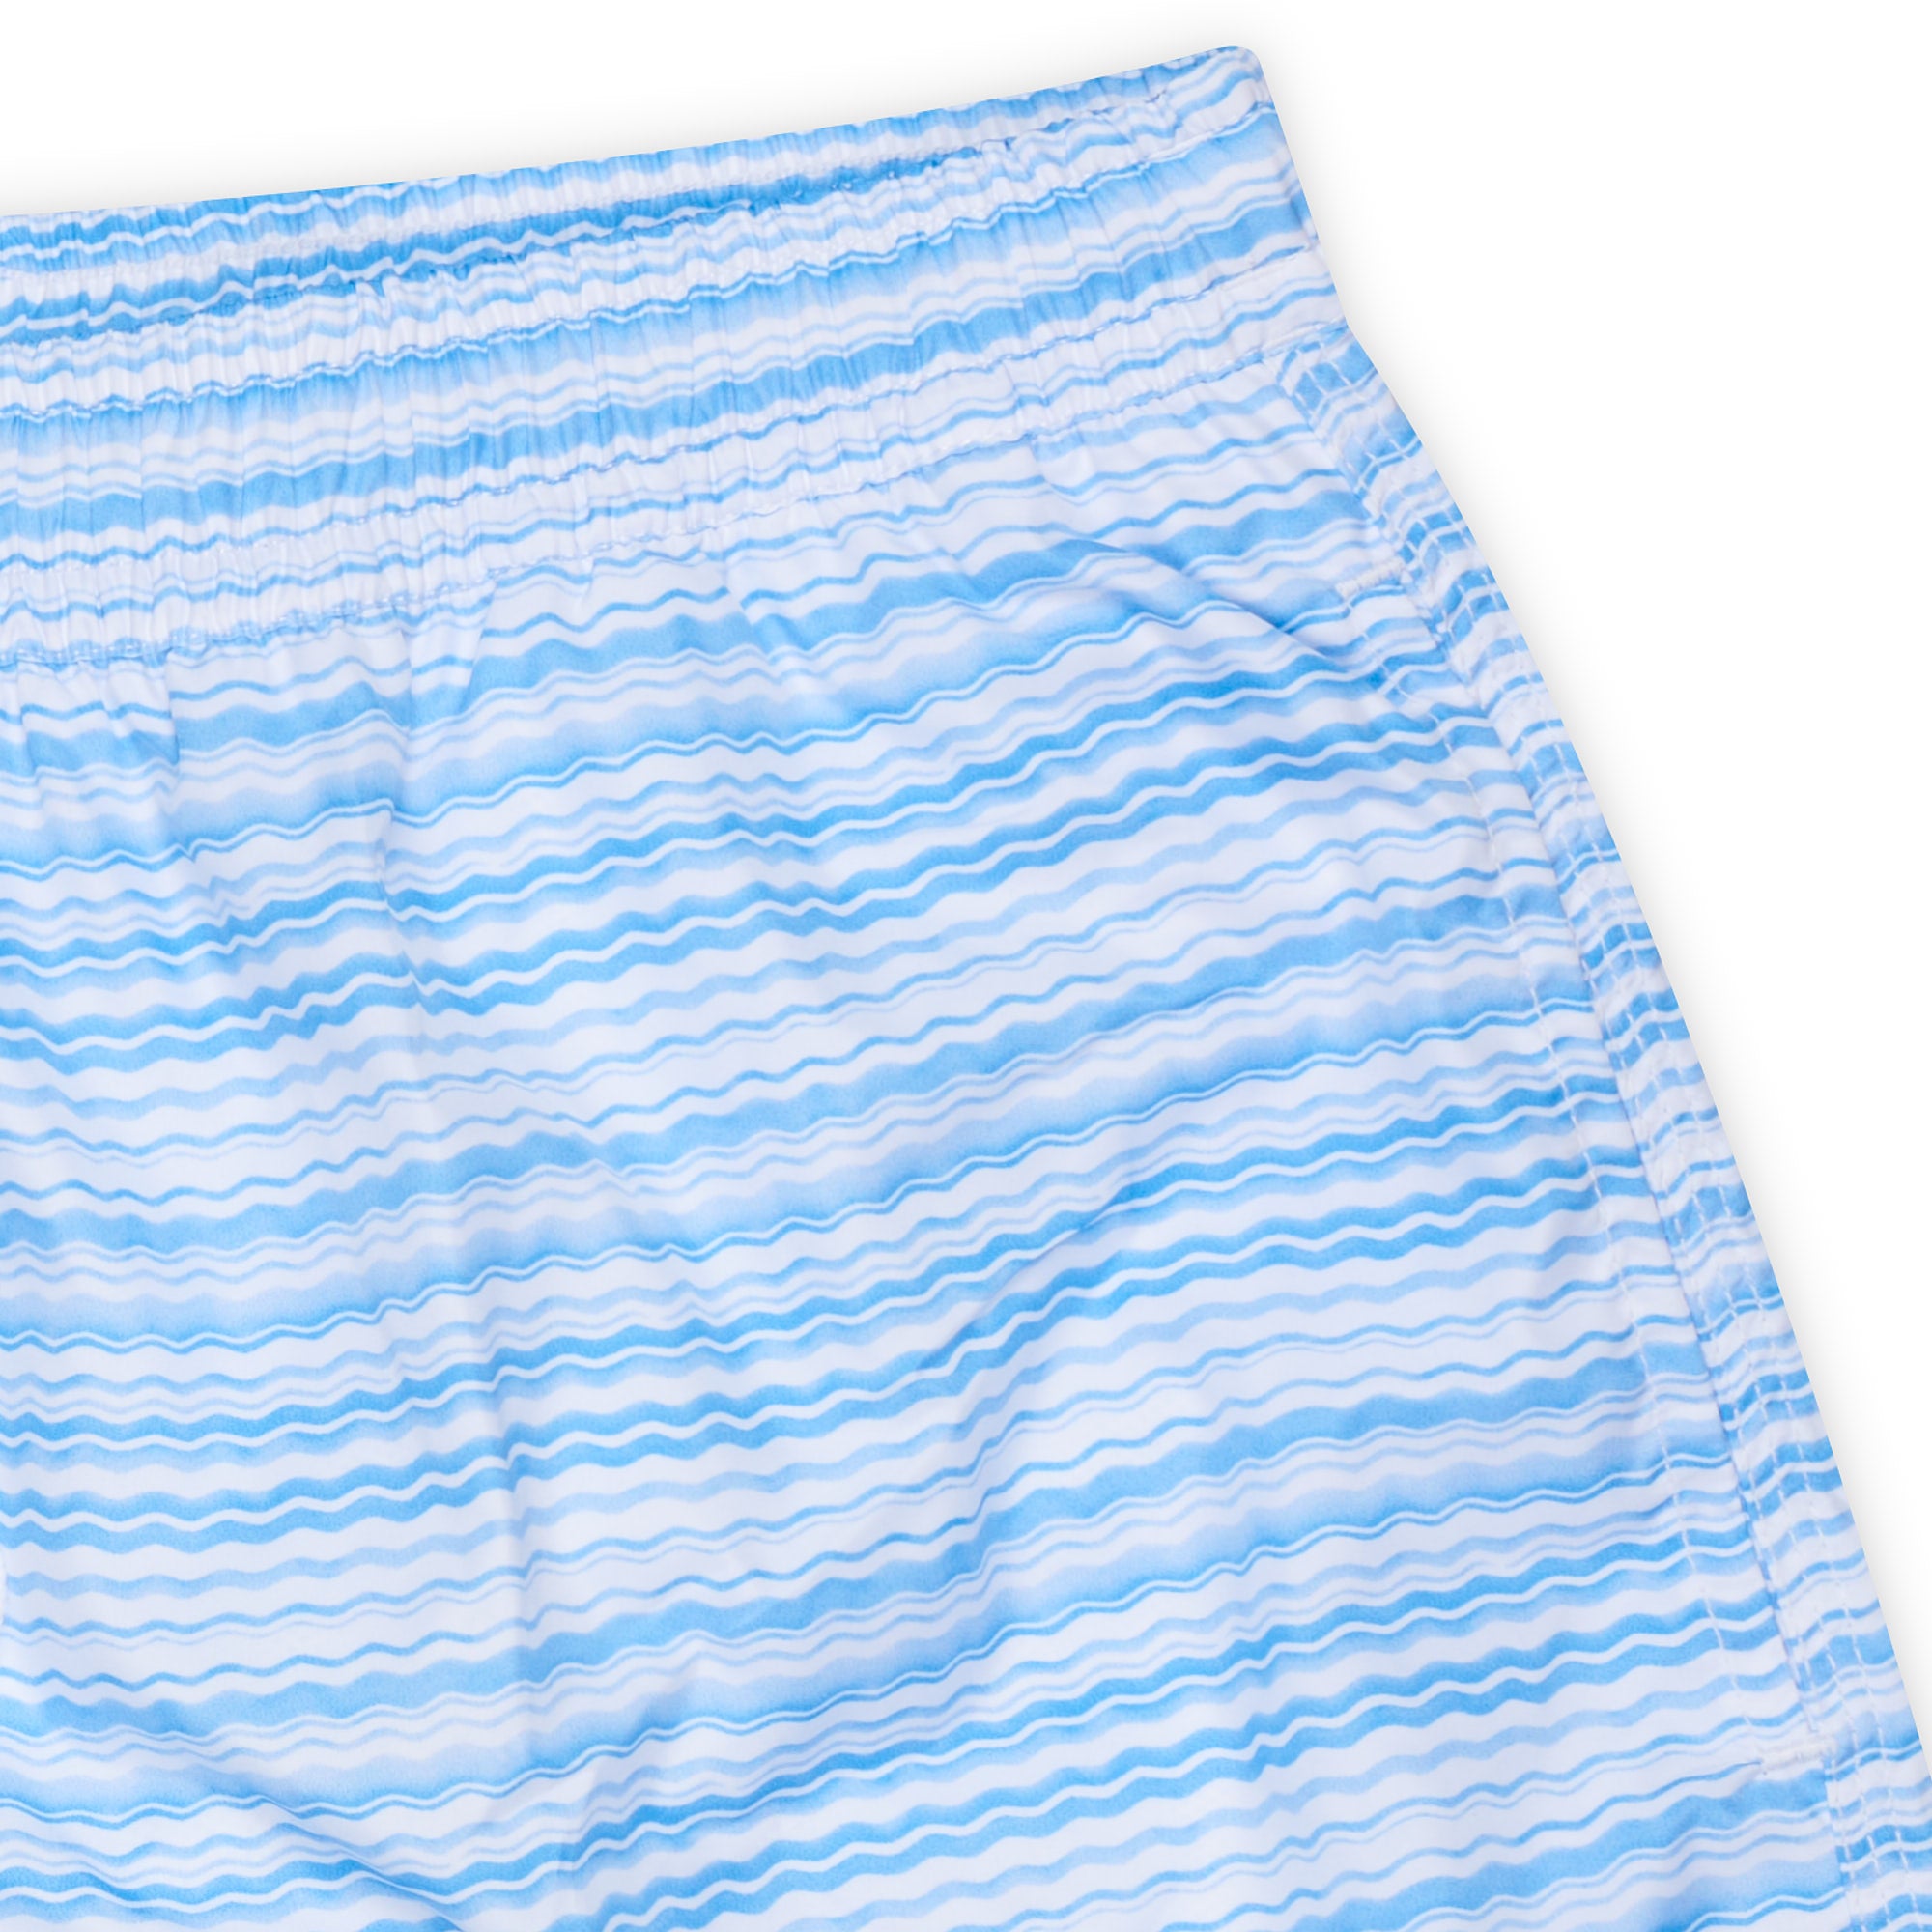 FEDELI Blue-White Wavy Striped Madeira Airstop Swim Shorts Trunks US L NEW FEDELI